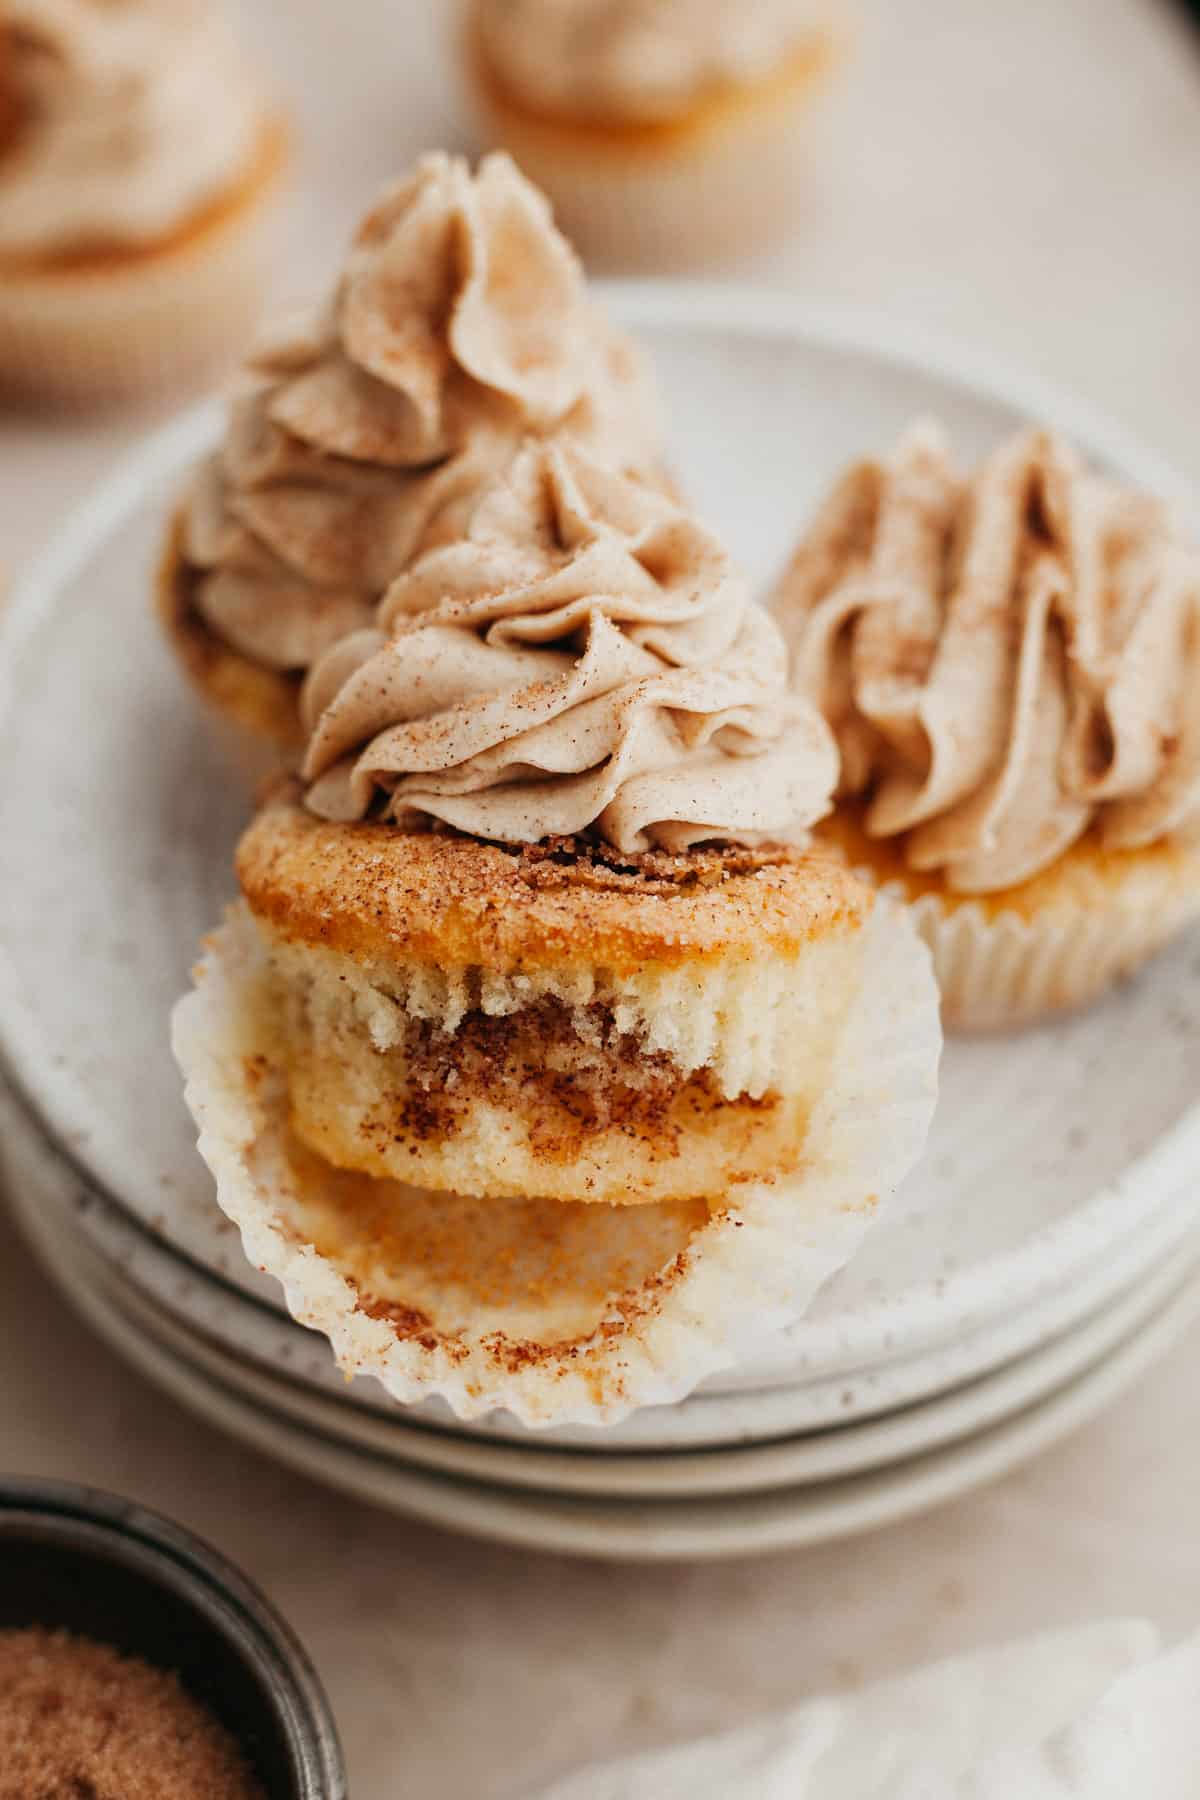 three cinnamon swirl cupcakes on a beige plate.